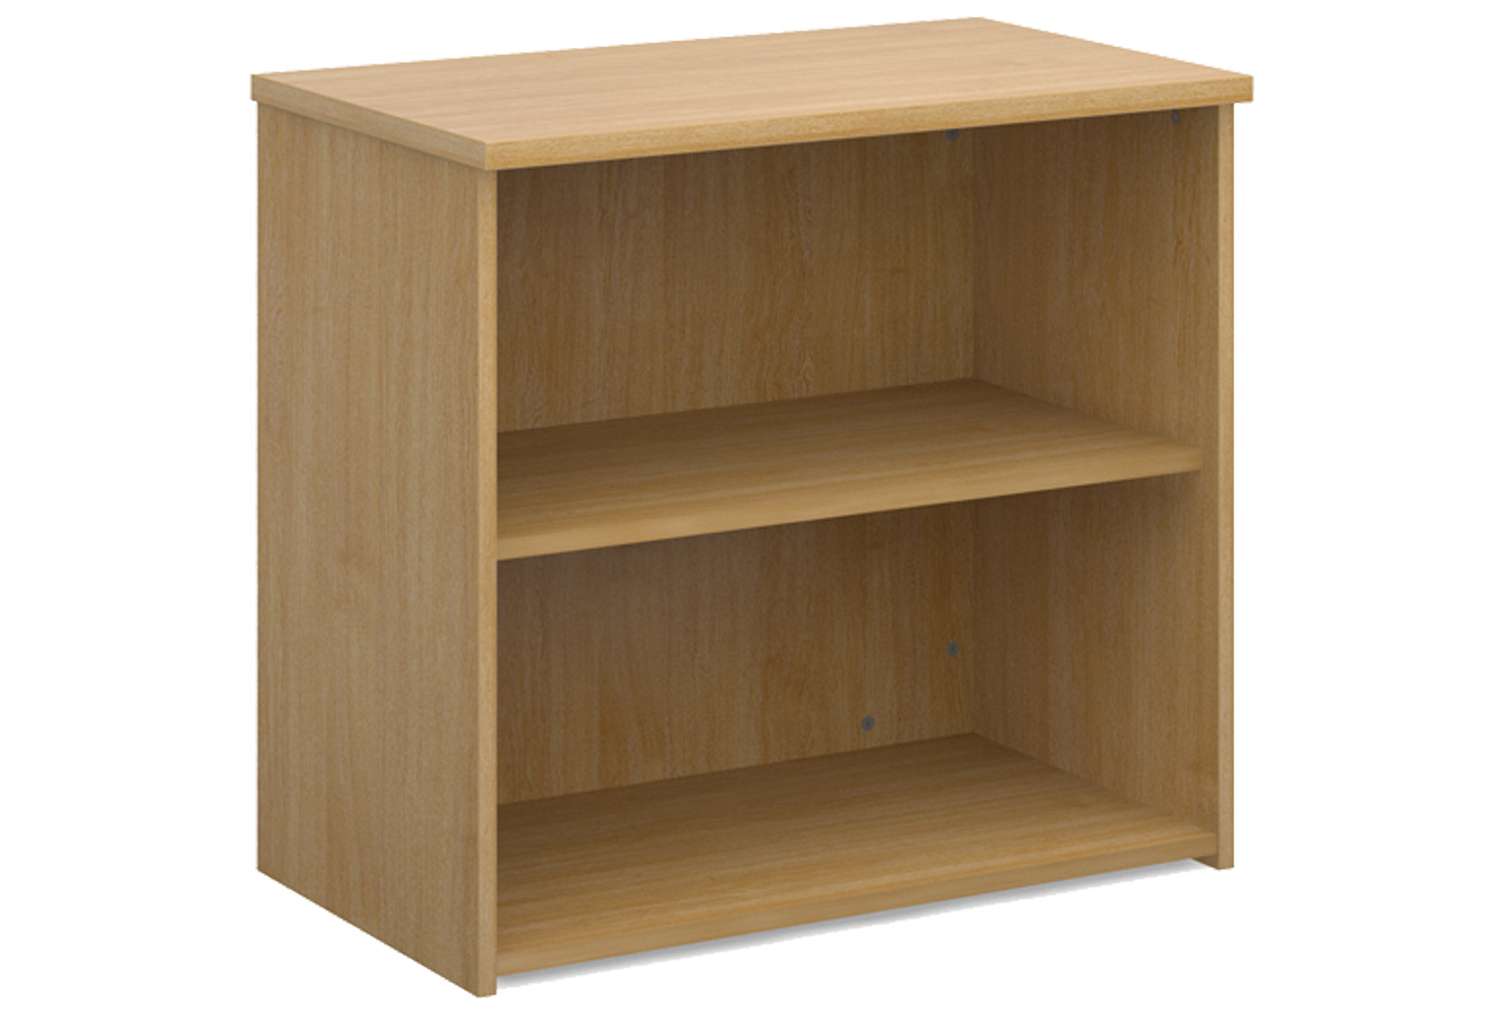 All Oak Office Bookcases, 1 Shelf - 80wx47dx74h (cm)